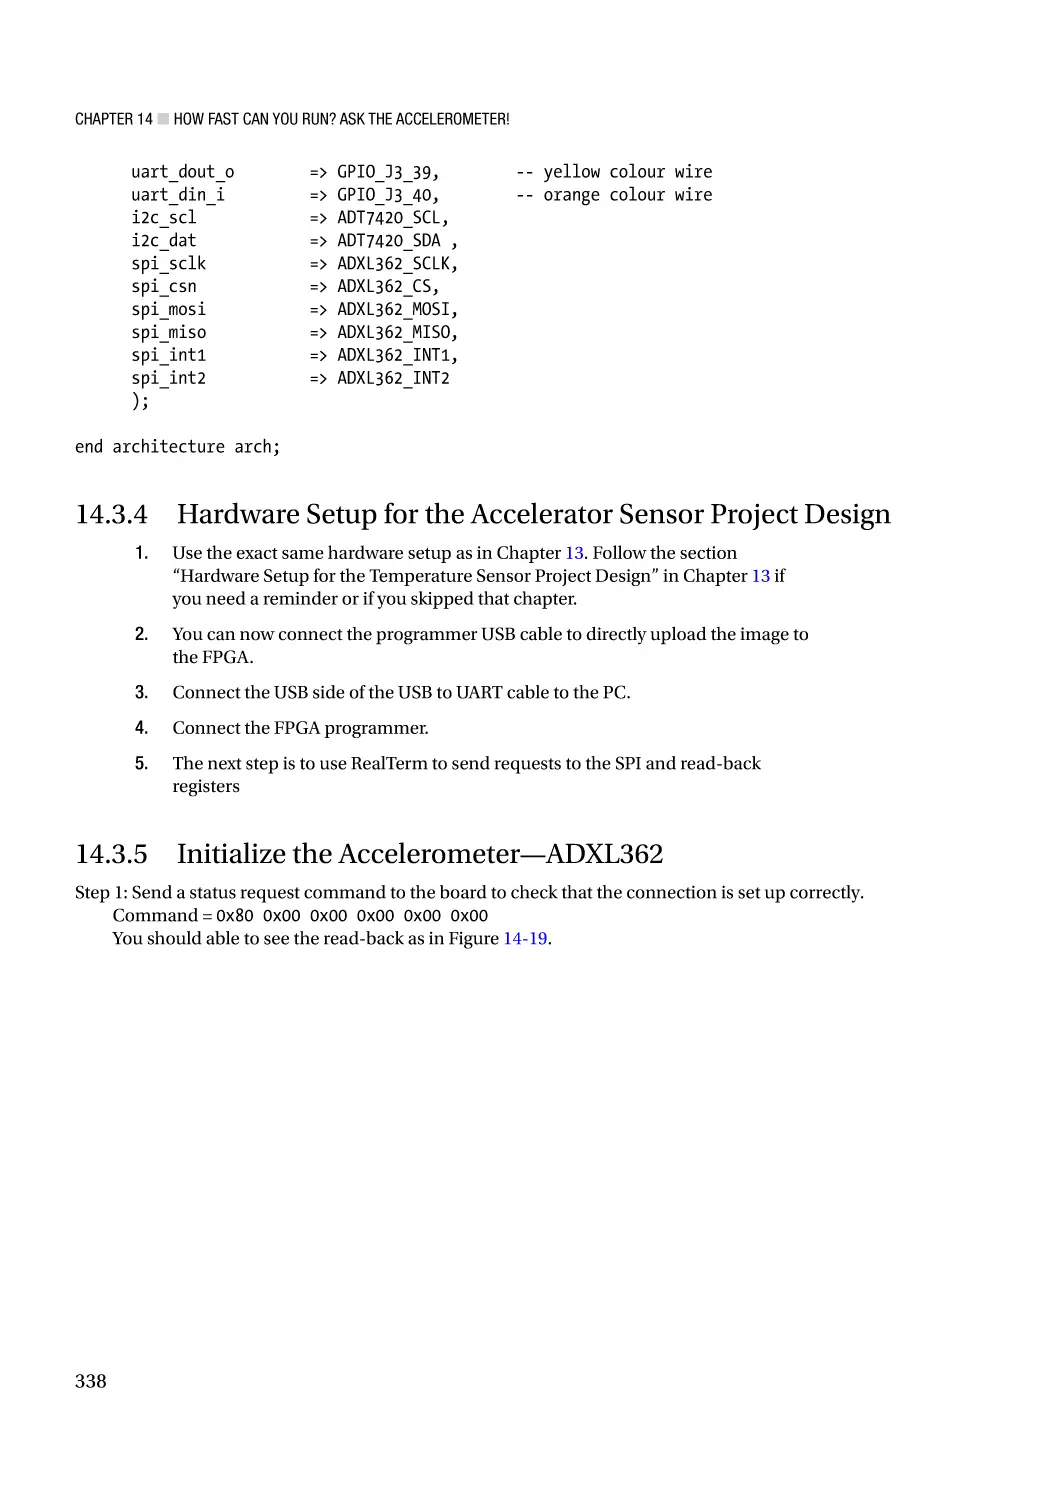 14.3.4 Hardware Setup for the Accelerator Sensor Project Design
14.3.5 Initialize the Accelerometer—ADXL362